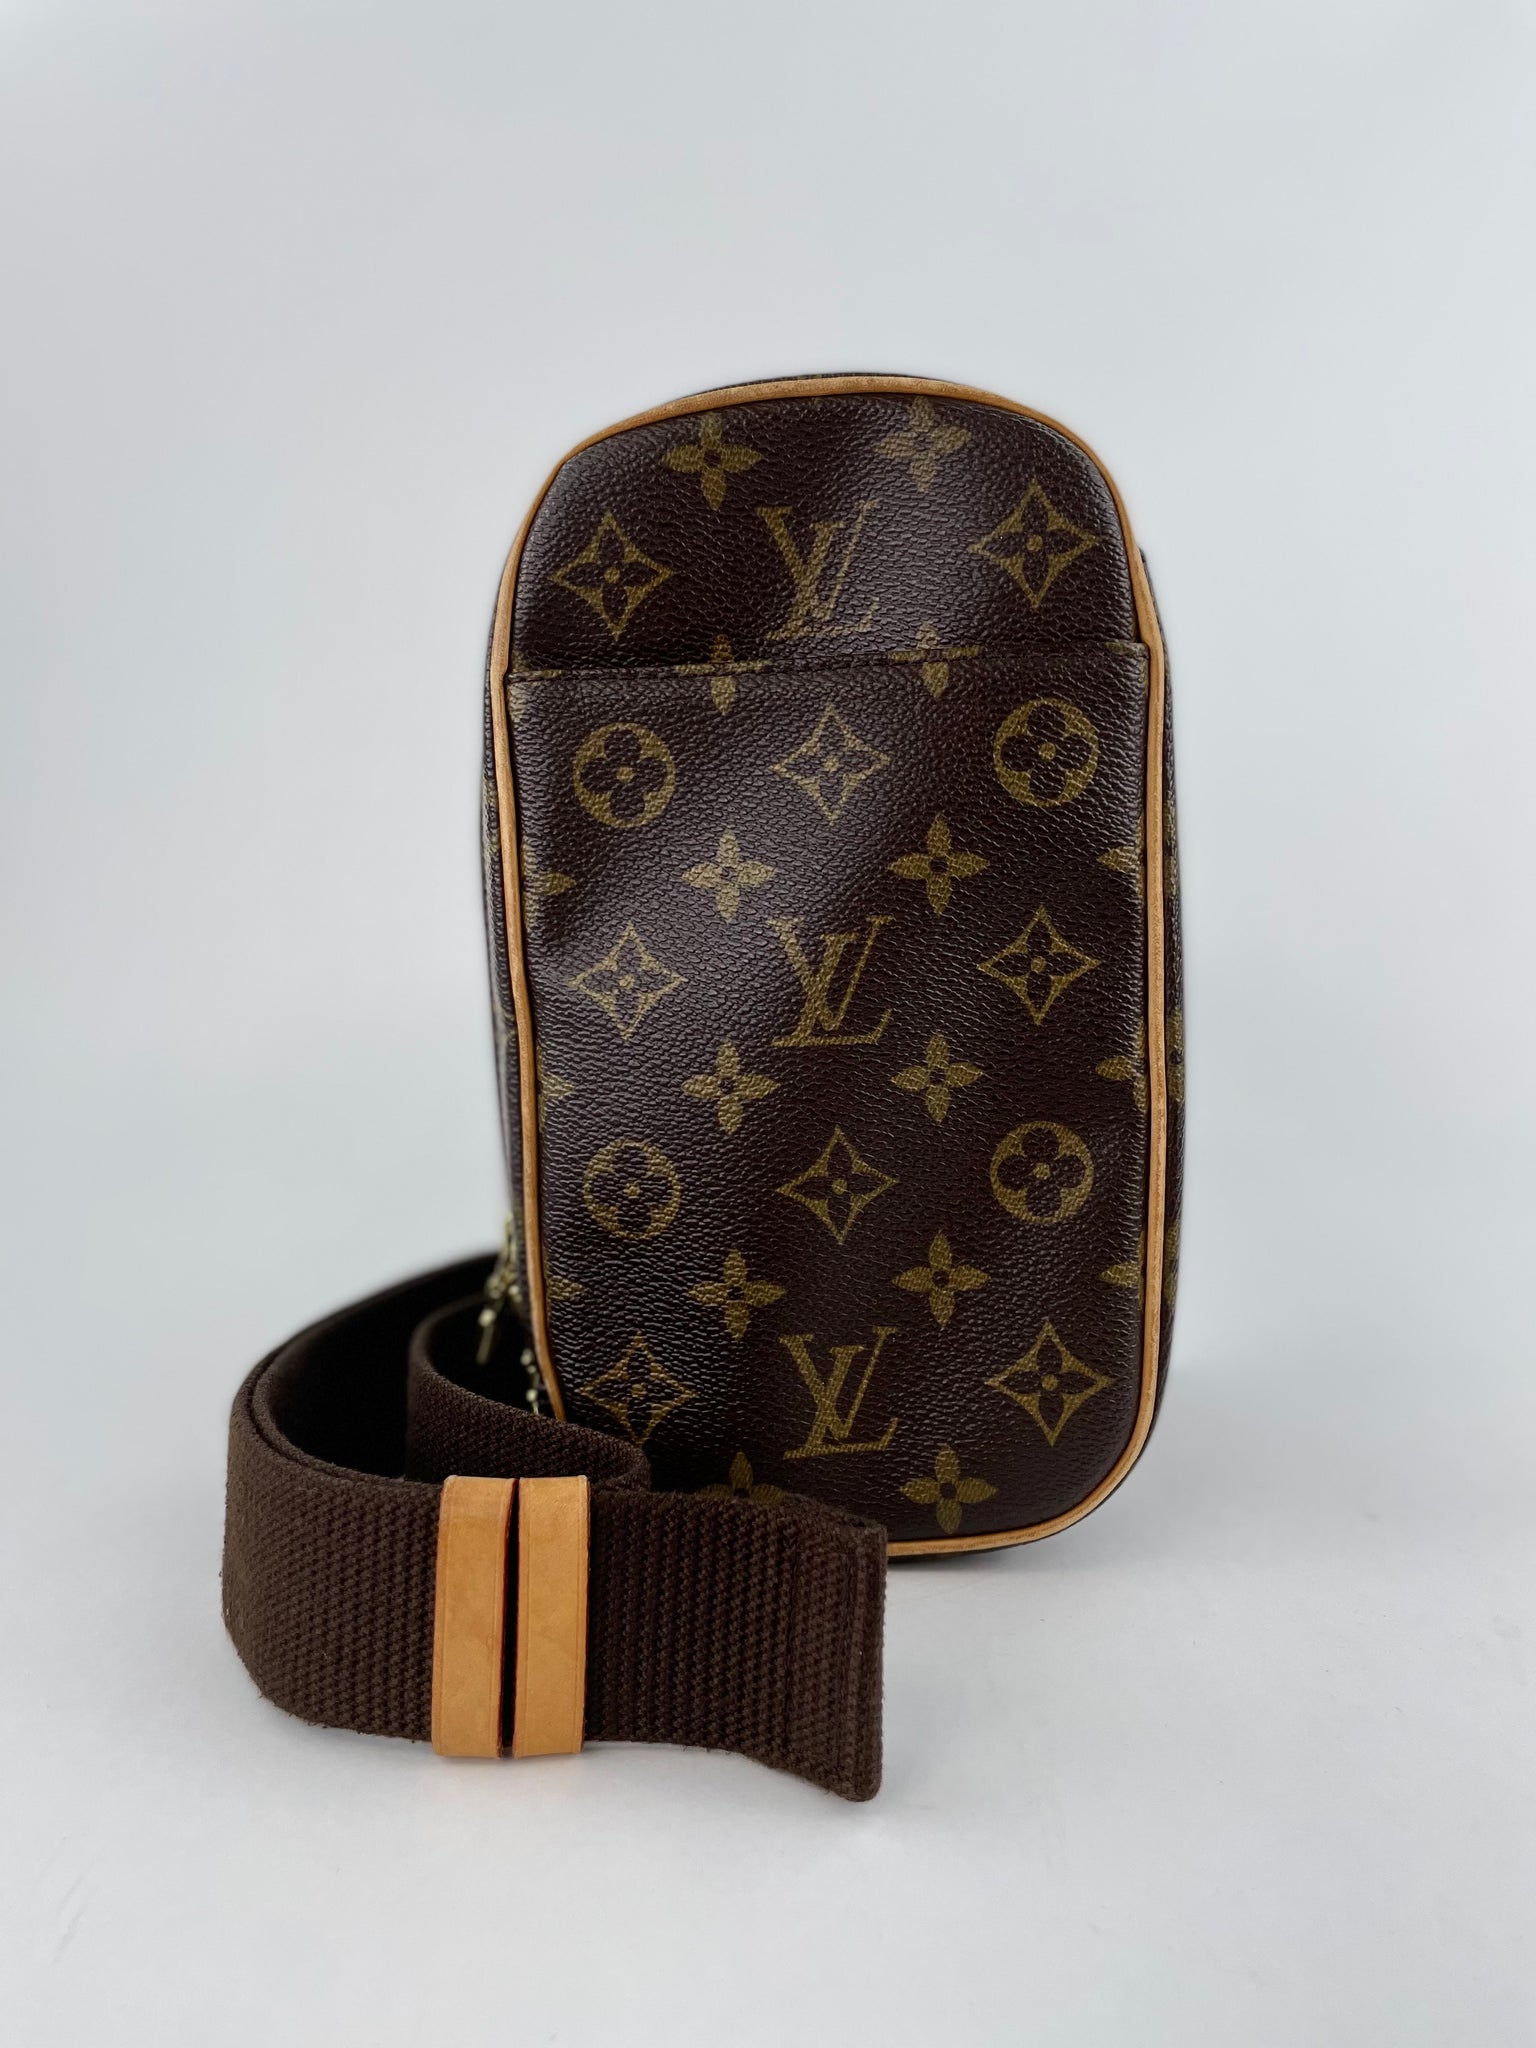 Louis Vuitton Monogram Crossbody Messenger Bag Brown